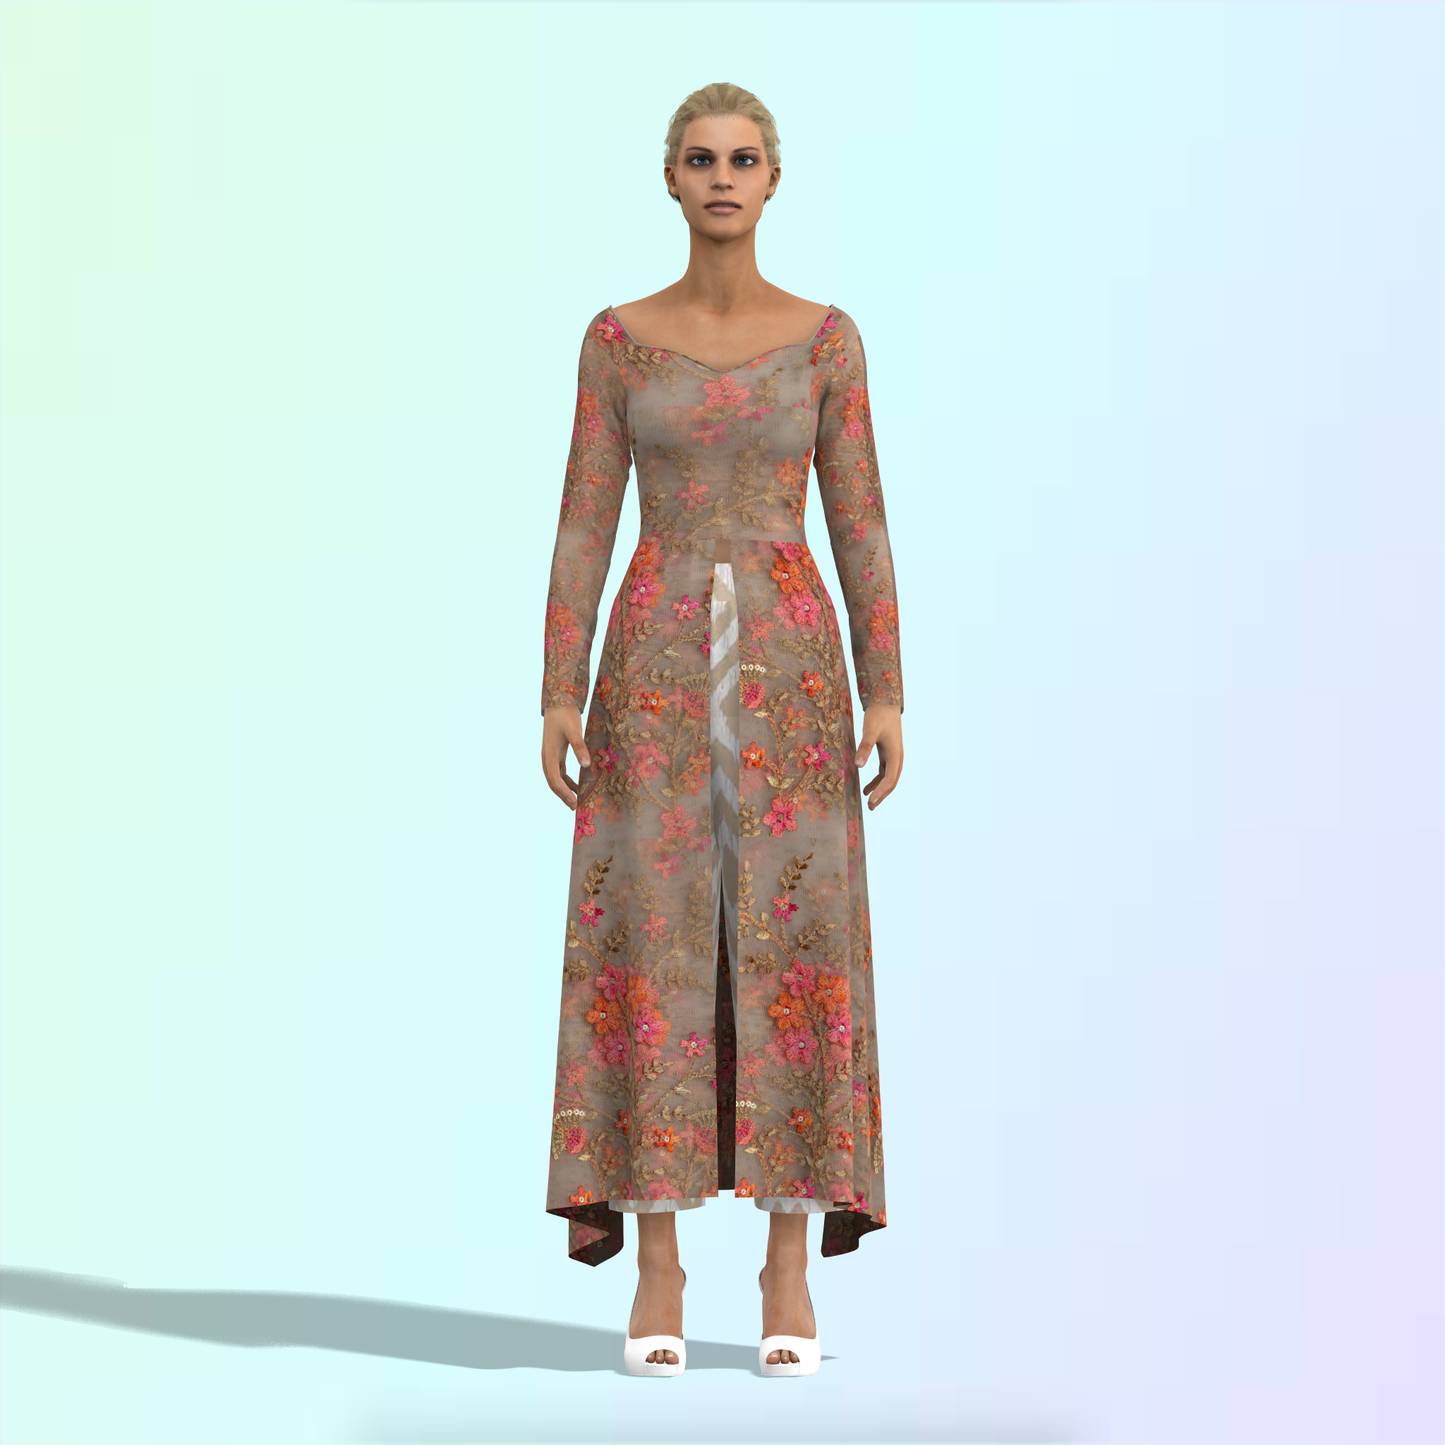 Mini-Me Slit Magic Mom-Daughter Combo Dress - MDC013 (Stitching Service)